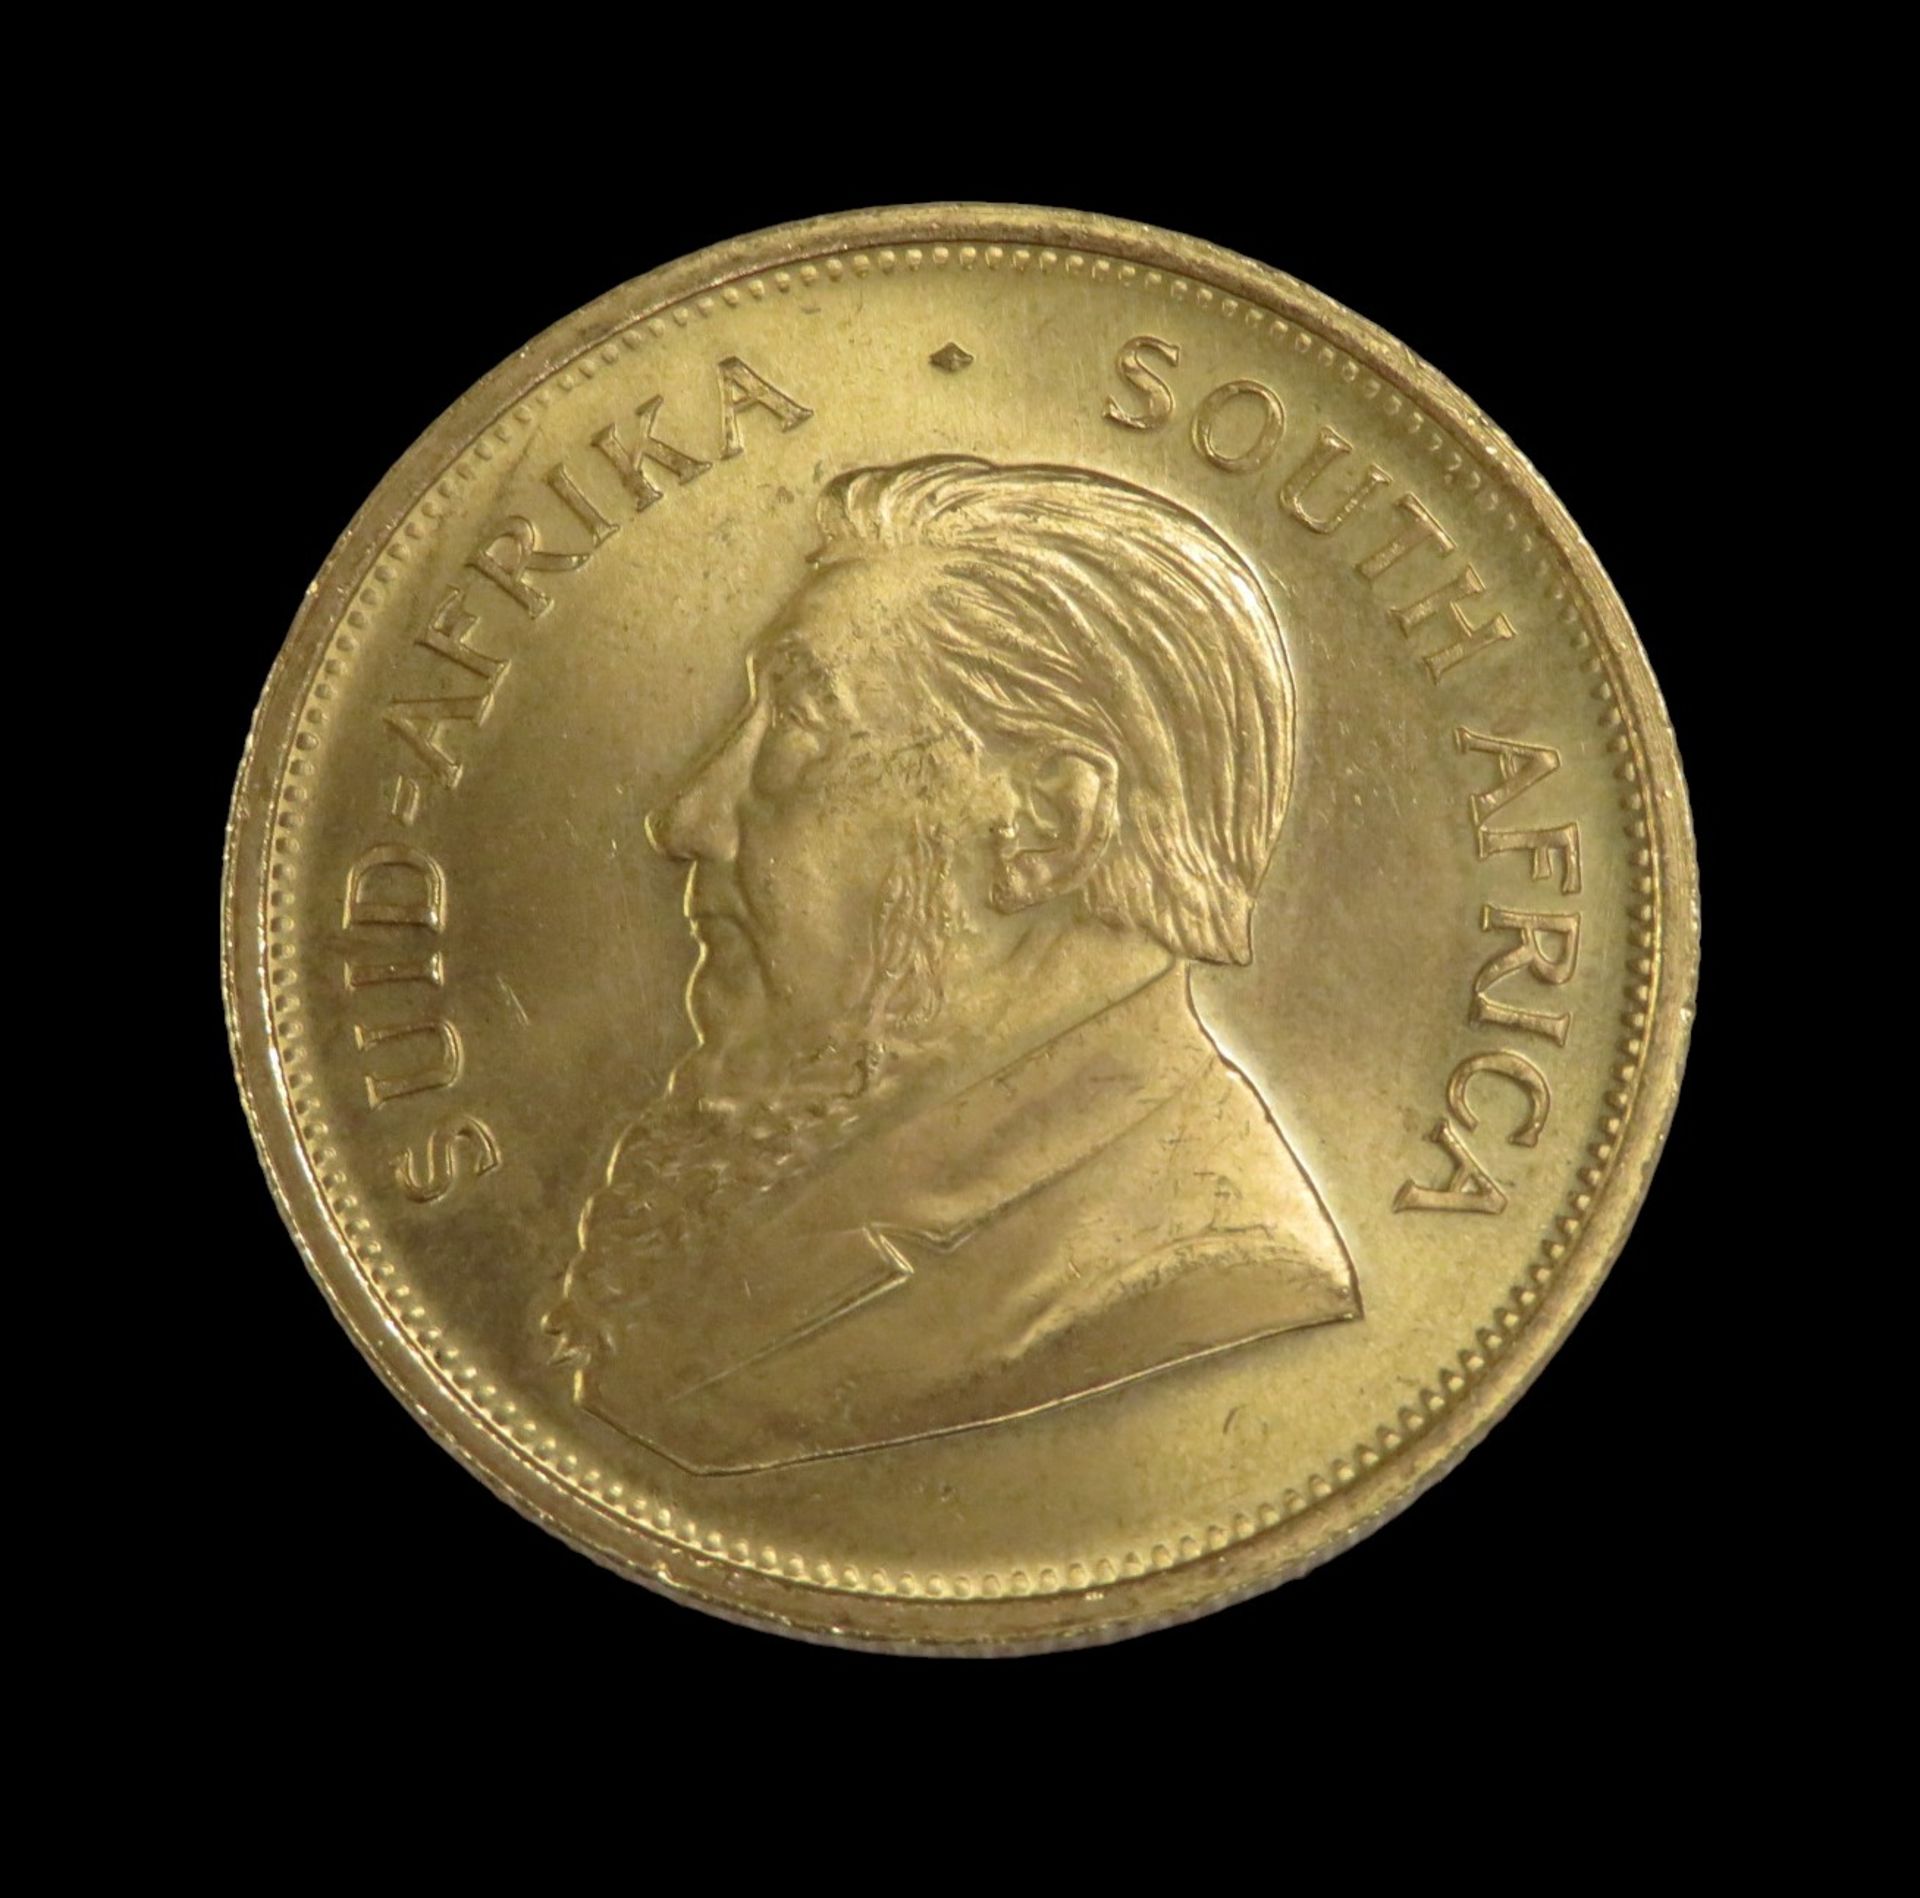 Goldmünze, Krügerrand, Südafrika, 1971, 1 OZ, Gold 916,66/000, 33,9 g, d 3,27 cm. - Bild 2 aus 2